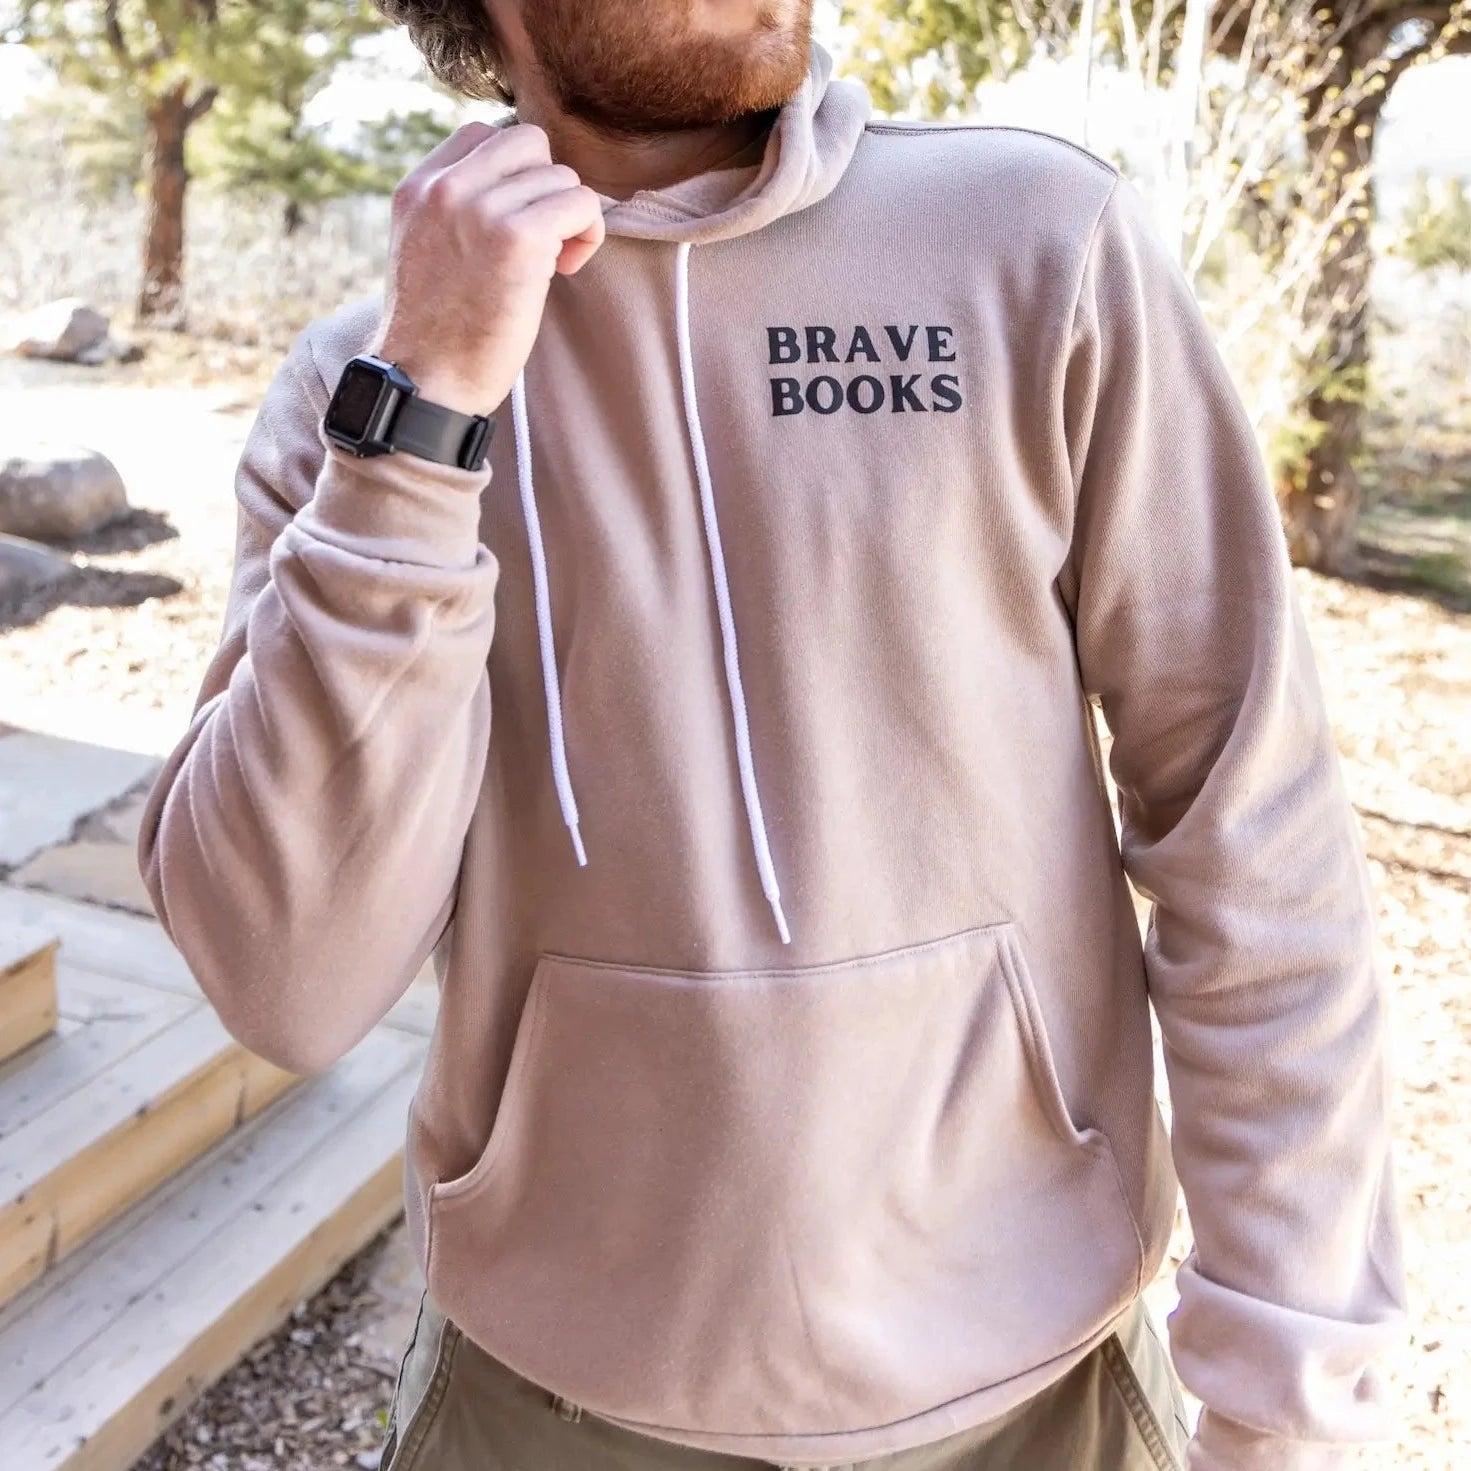 Man wearing BRAVE Books pro-god, pro-America hoodie